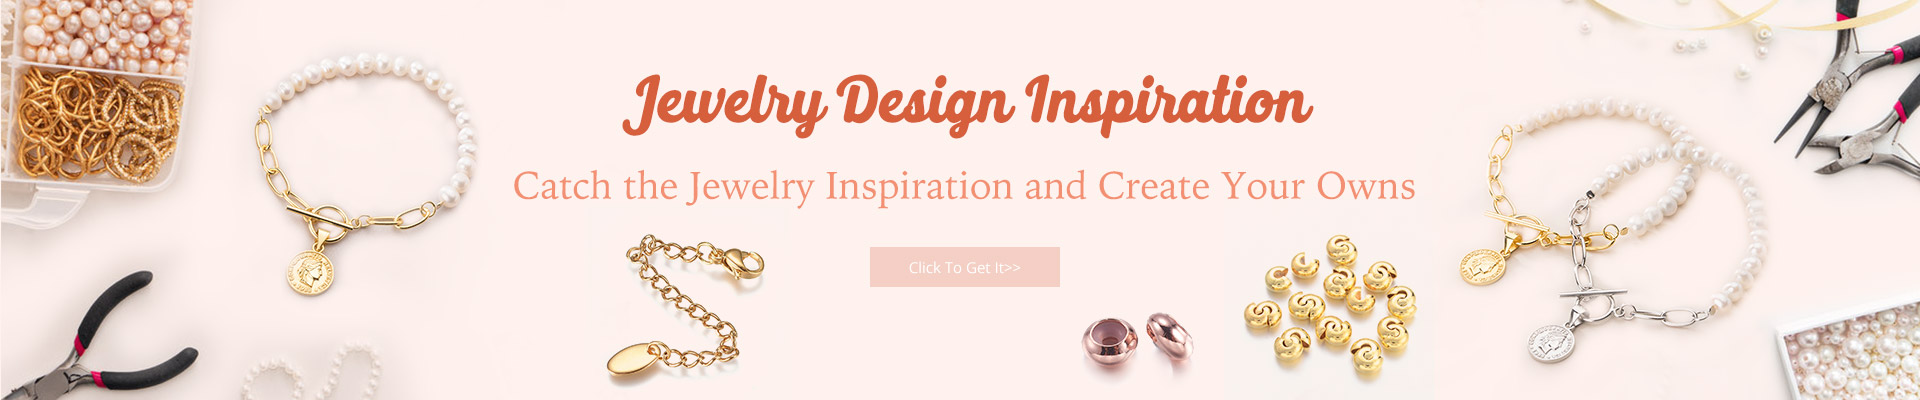 Jewelry Design Inspiration